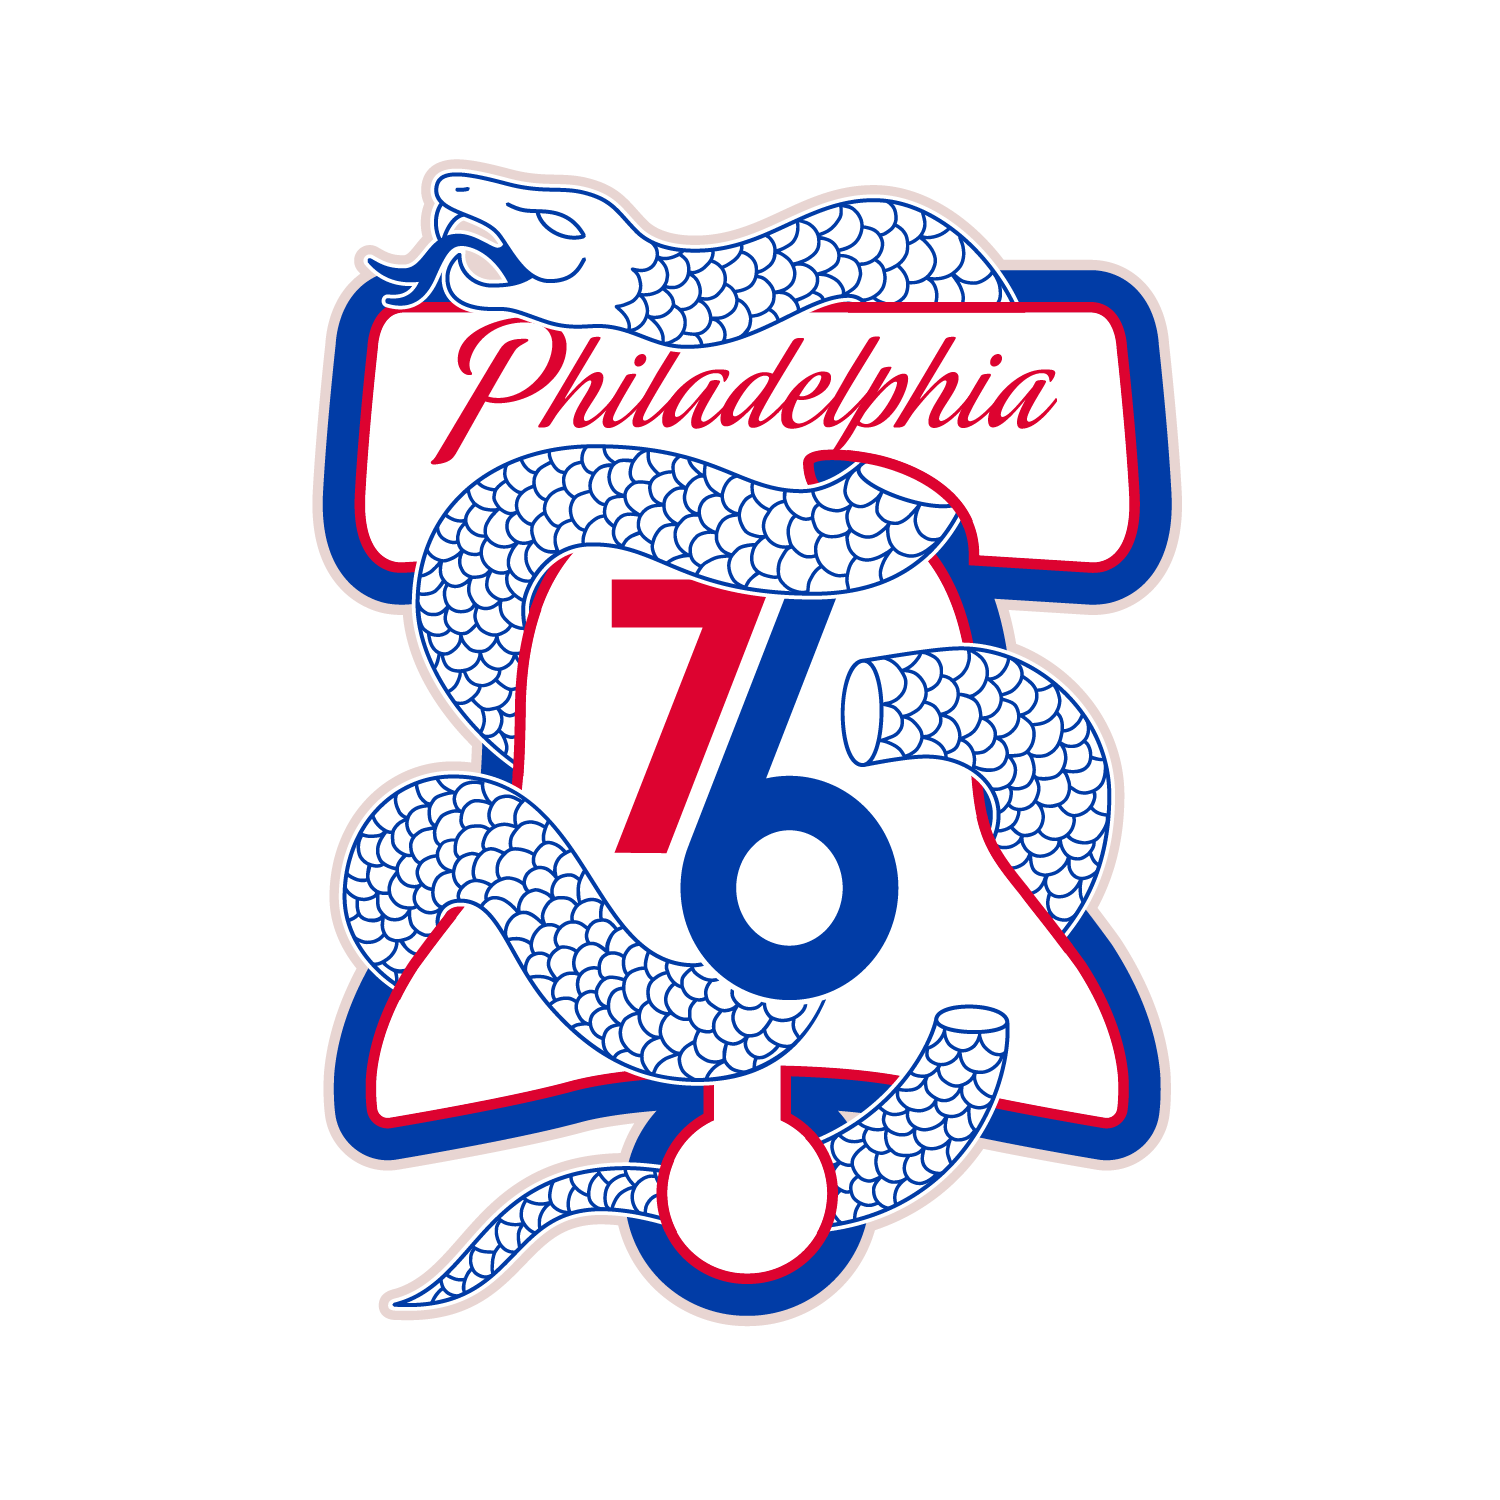 Philadelphia 76ers 2017-18 City Edition uniform and NBA ...